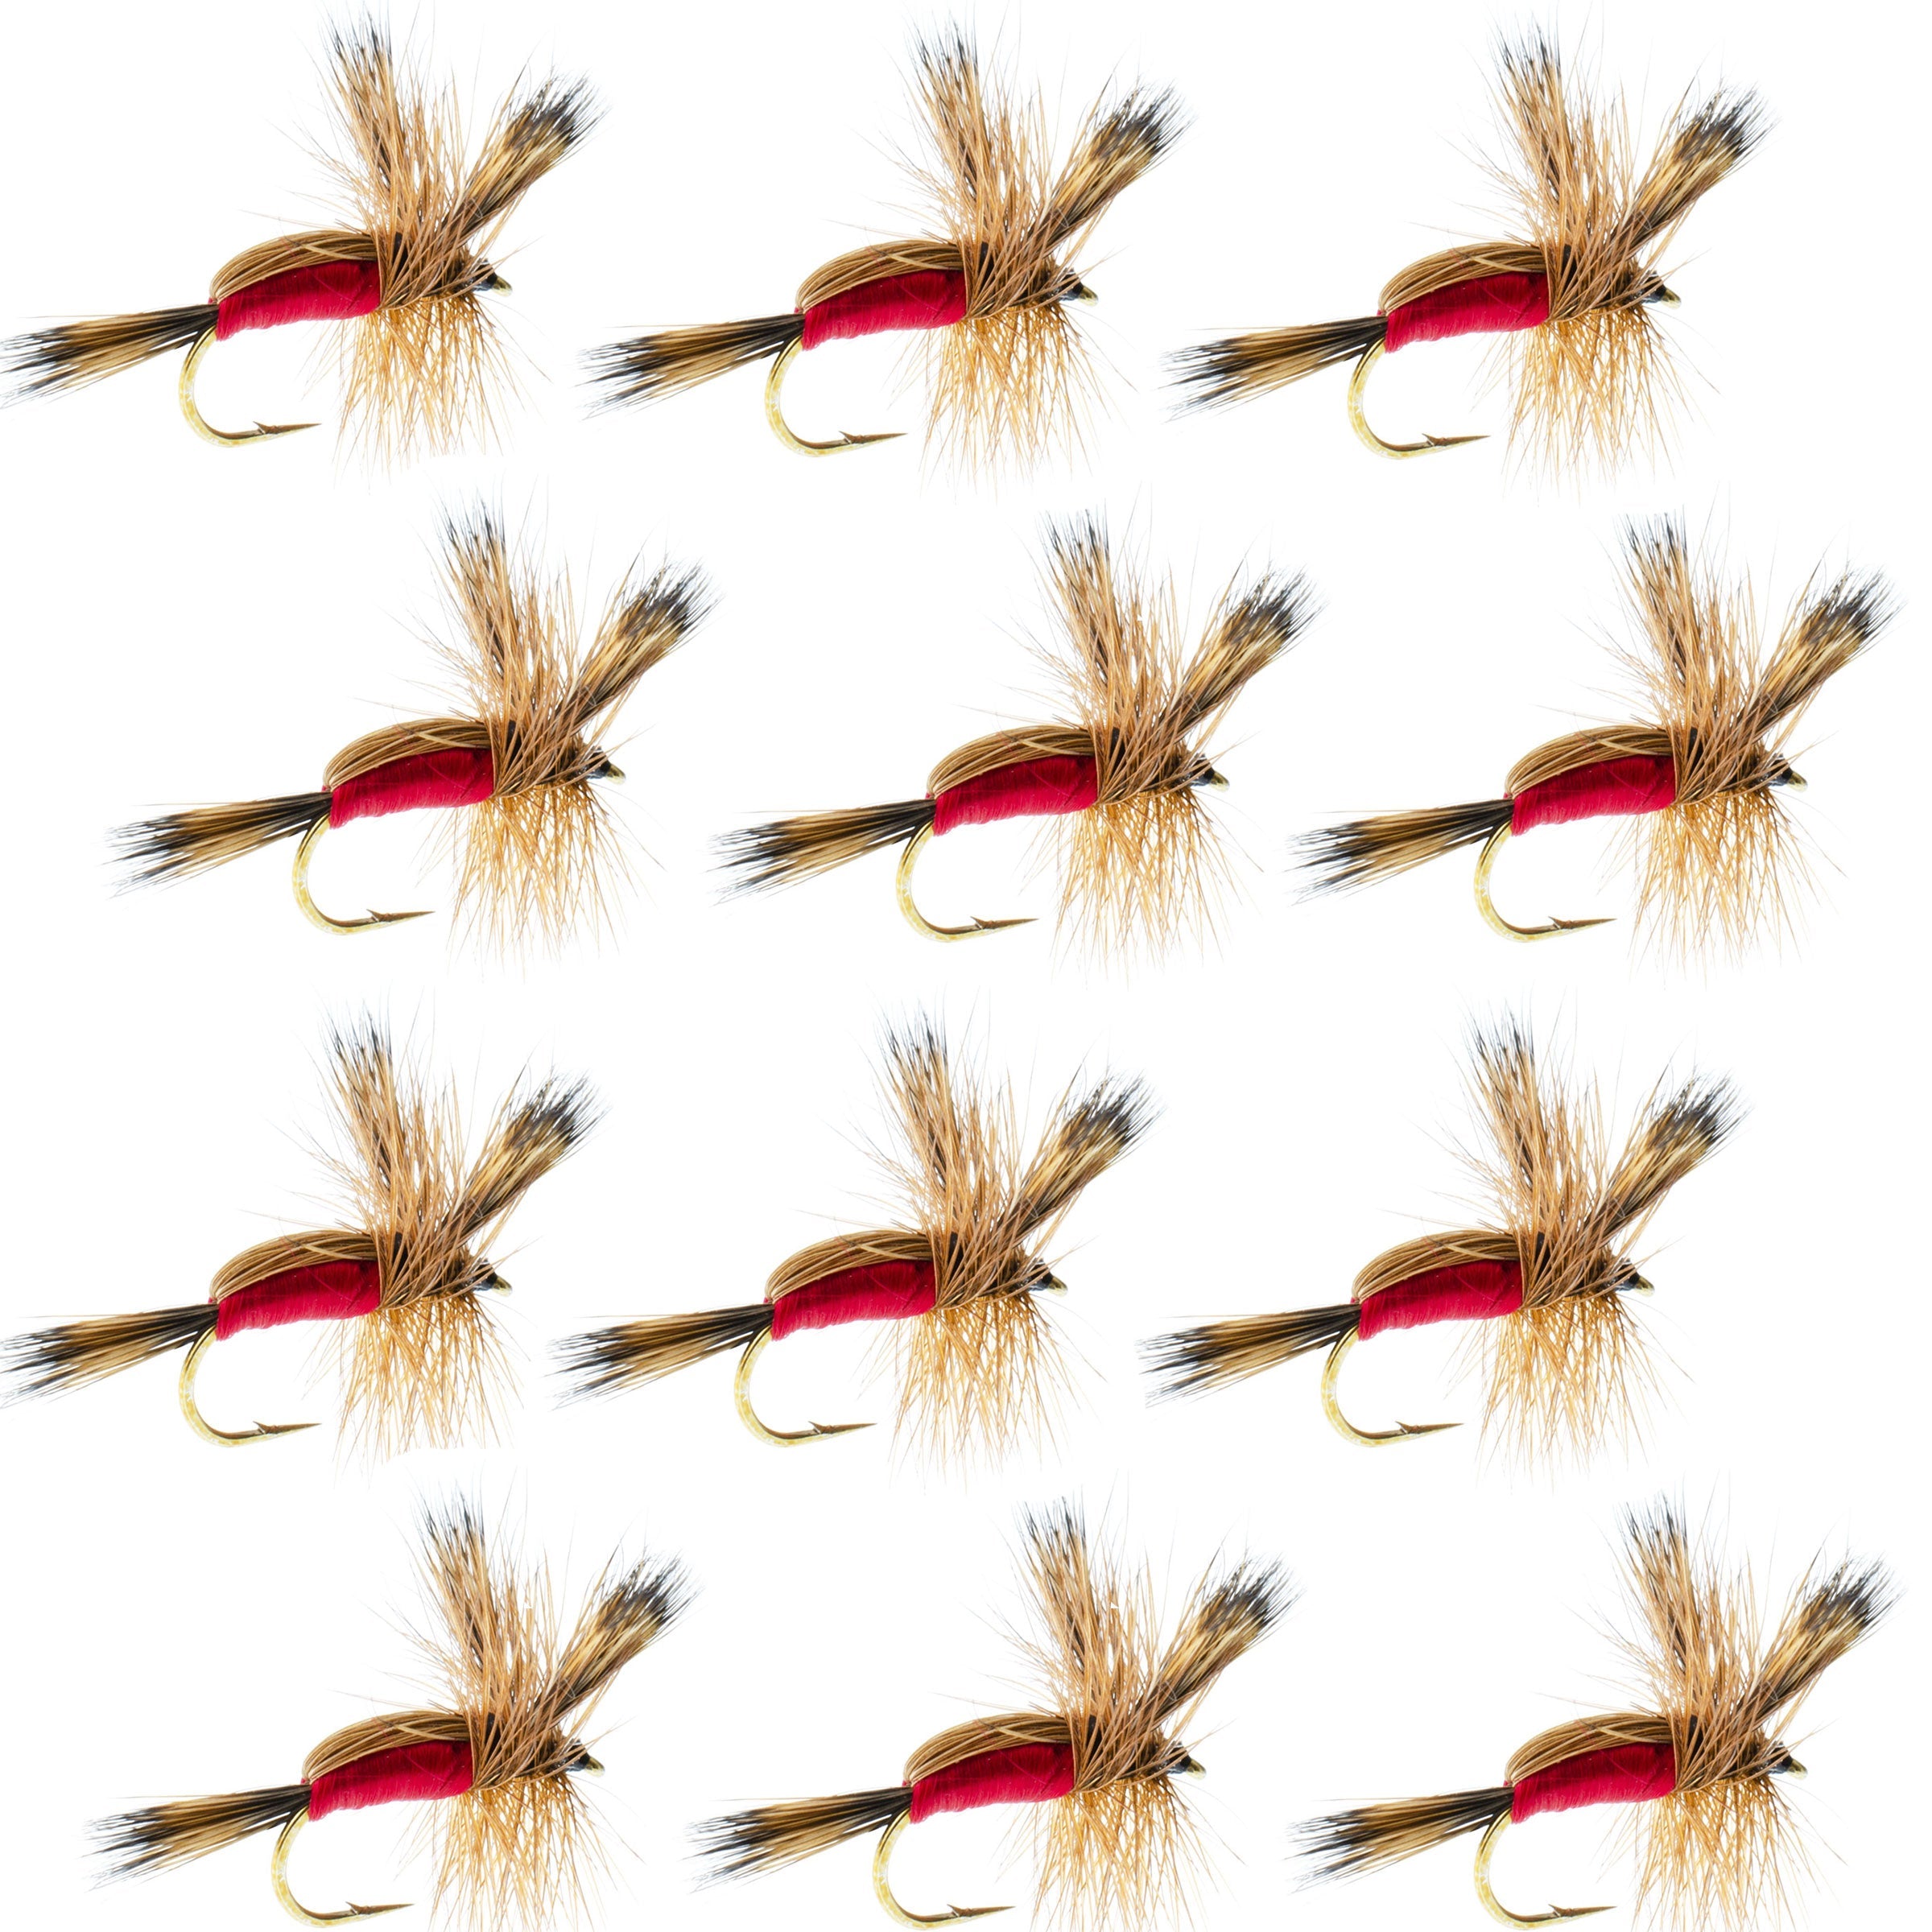 Red Humpy Classic Hair Wing Dry Fly - 1 docena de anzuelos para moscas, tamaño 12